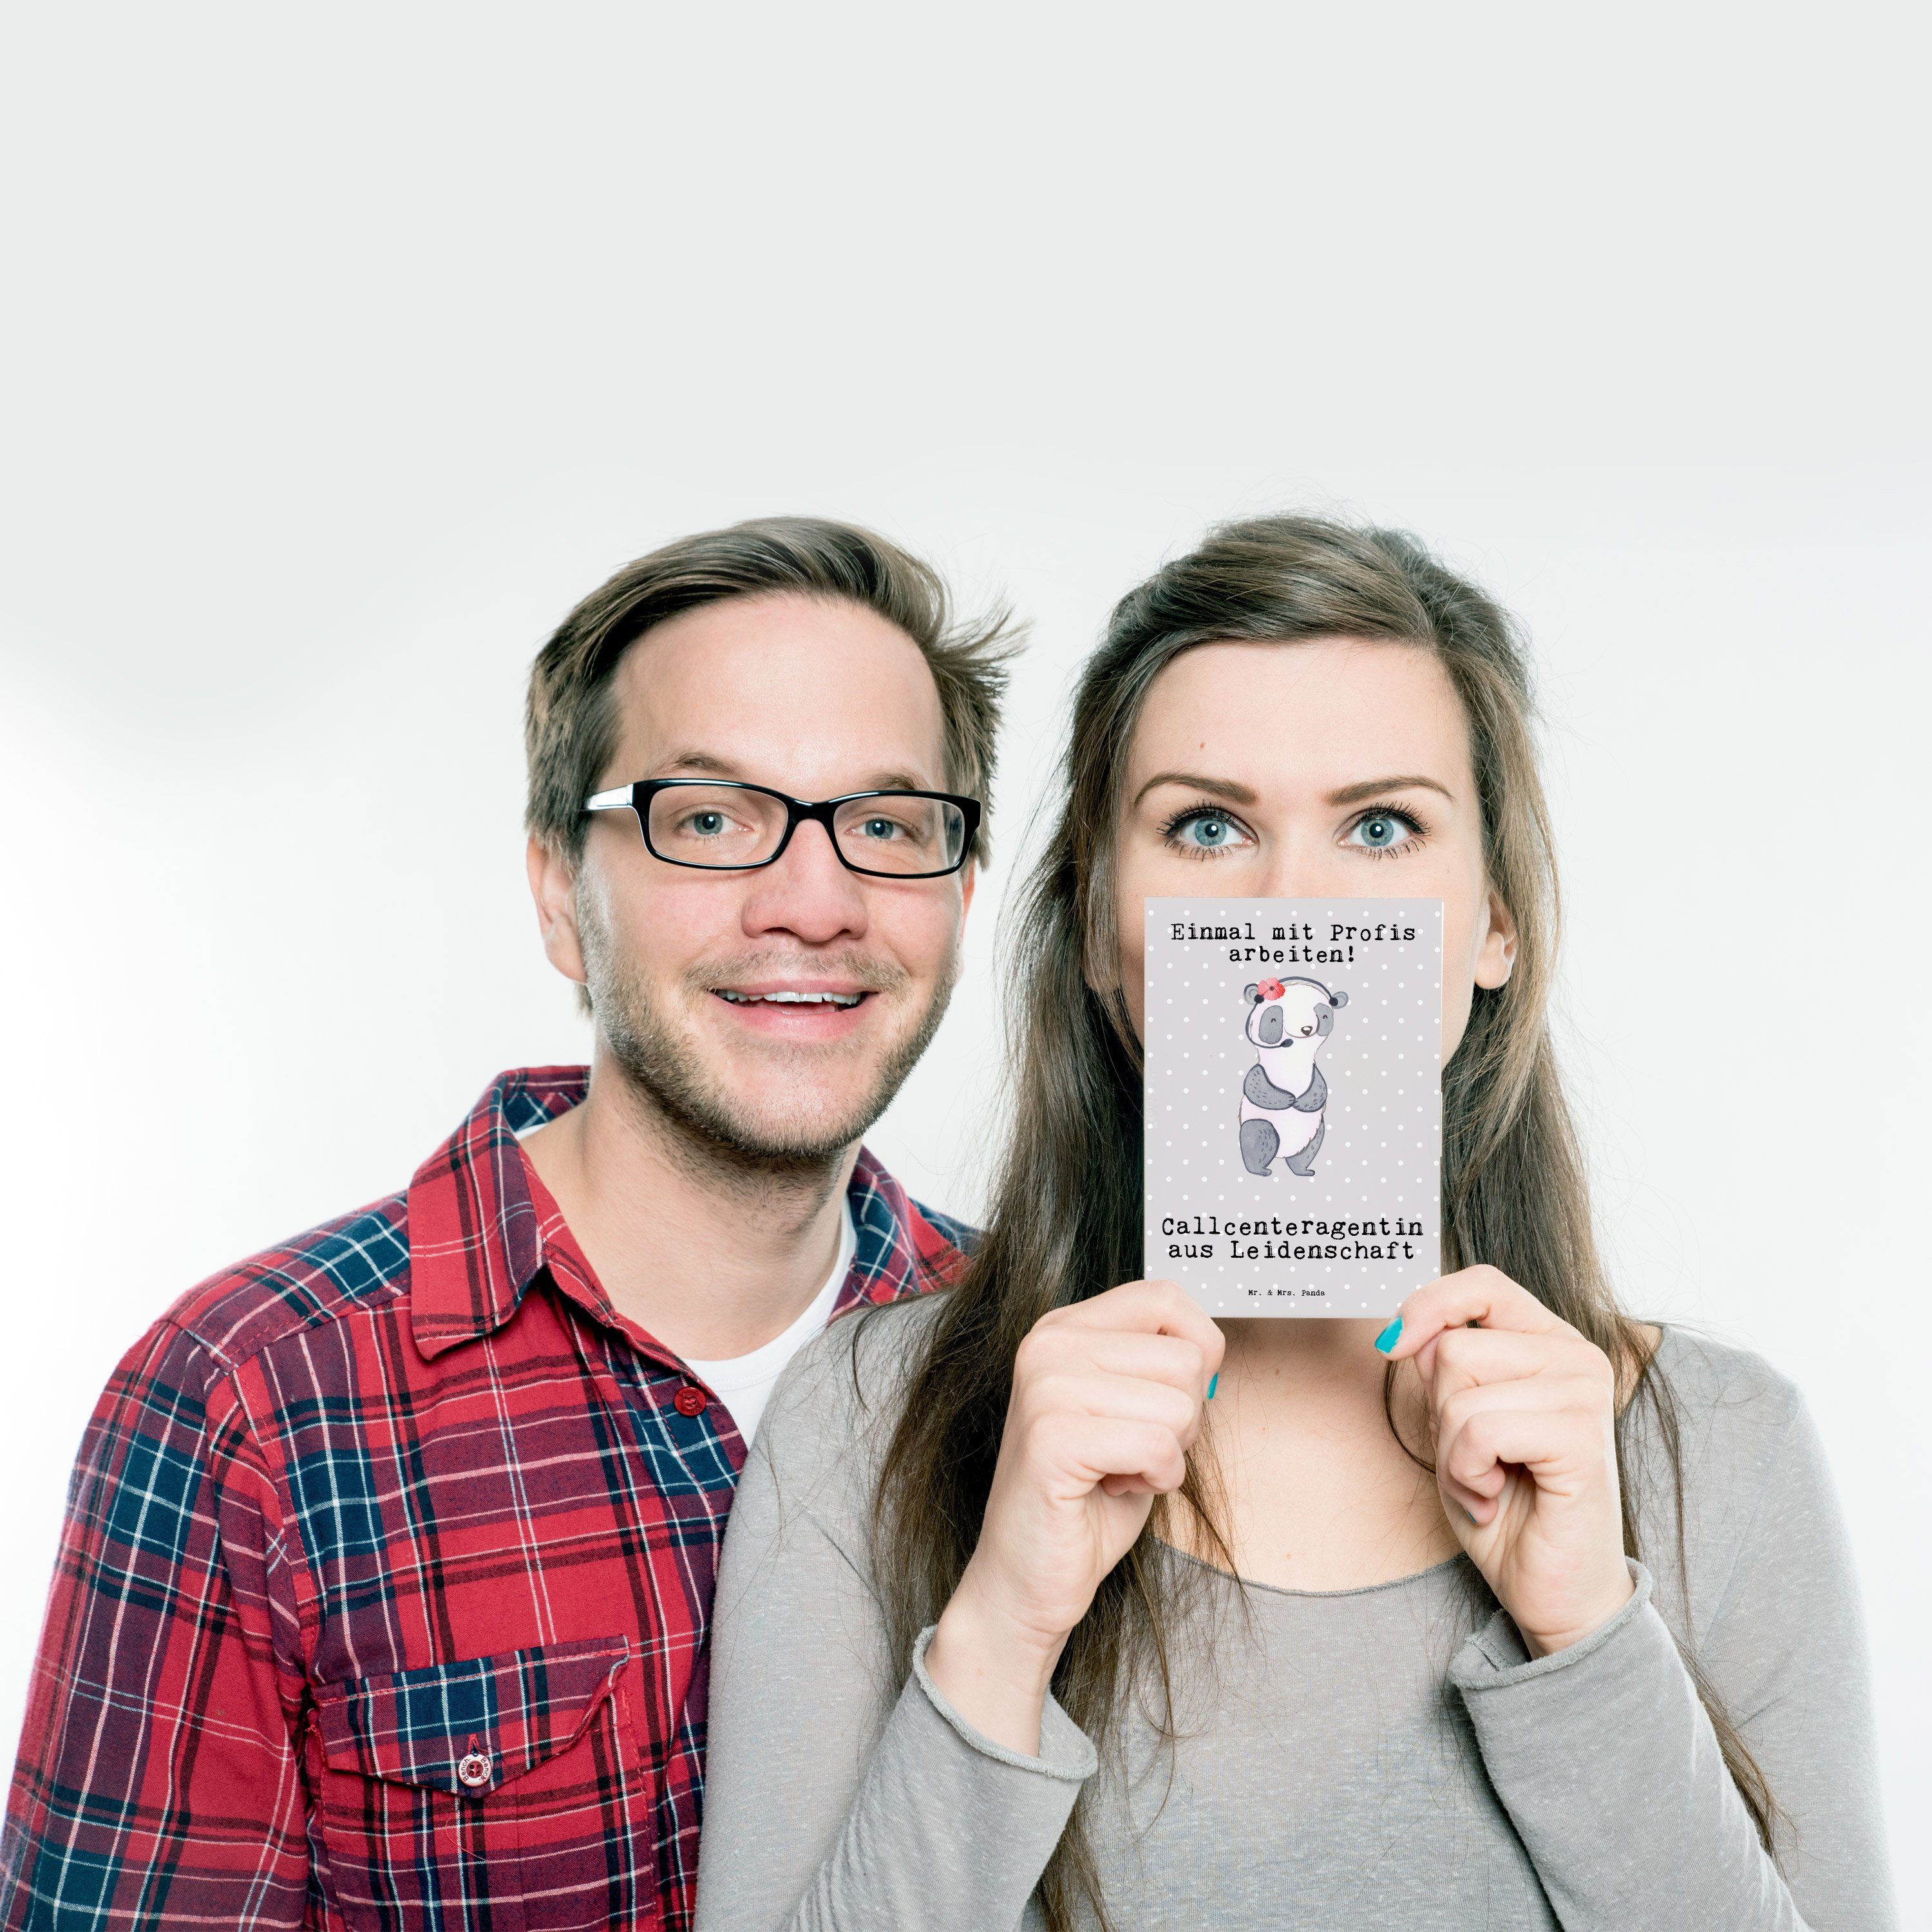 Mr. & Mrs. Panda Postkarte aus - Geschenk, - Arbeits Leidenschaft Grau Callcenteragentin Pastell